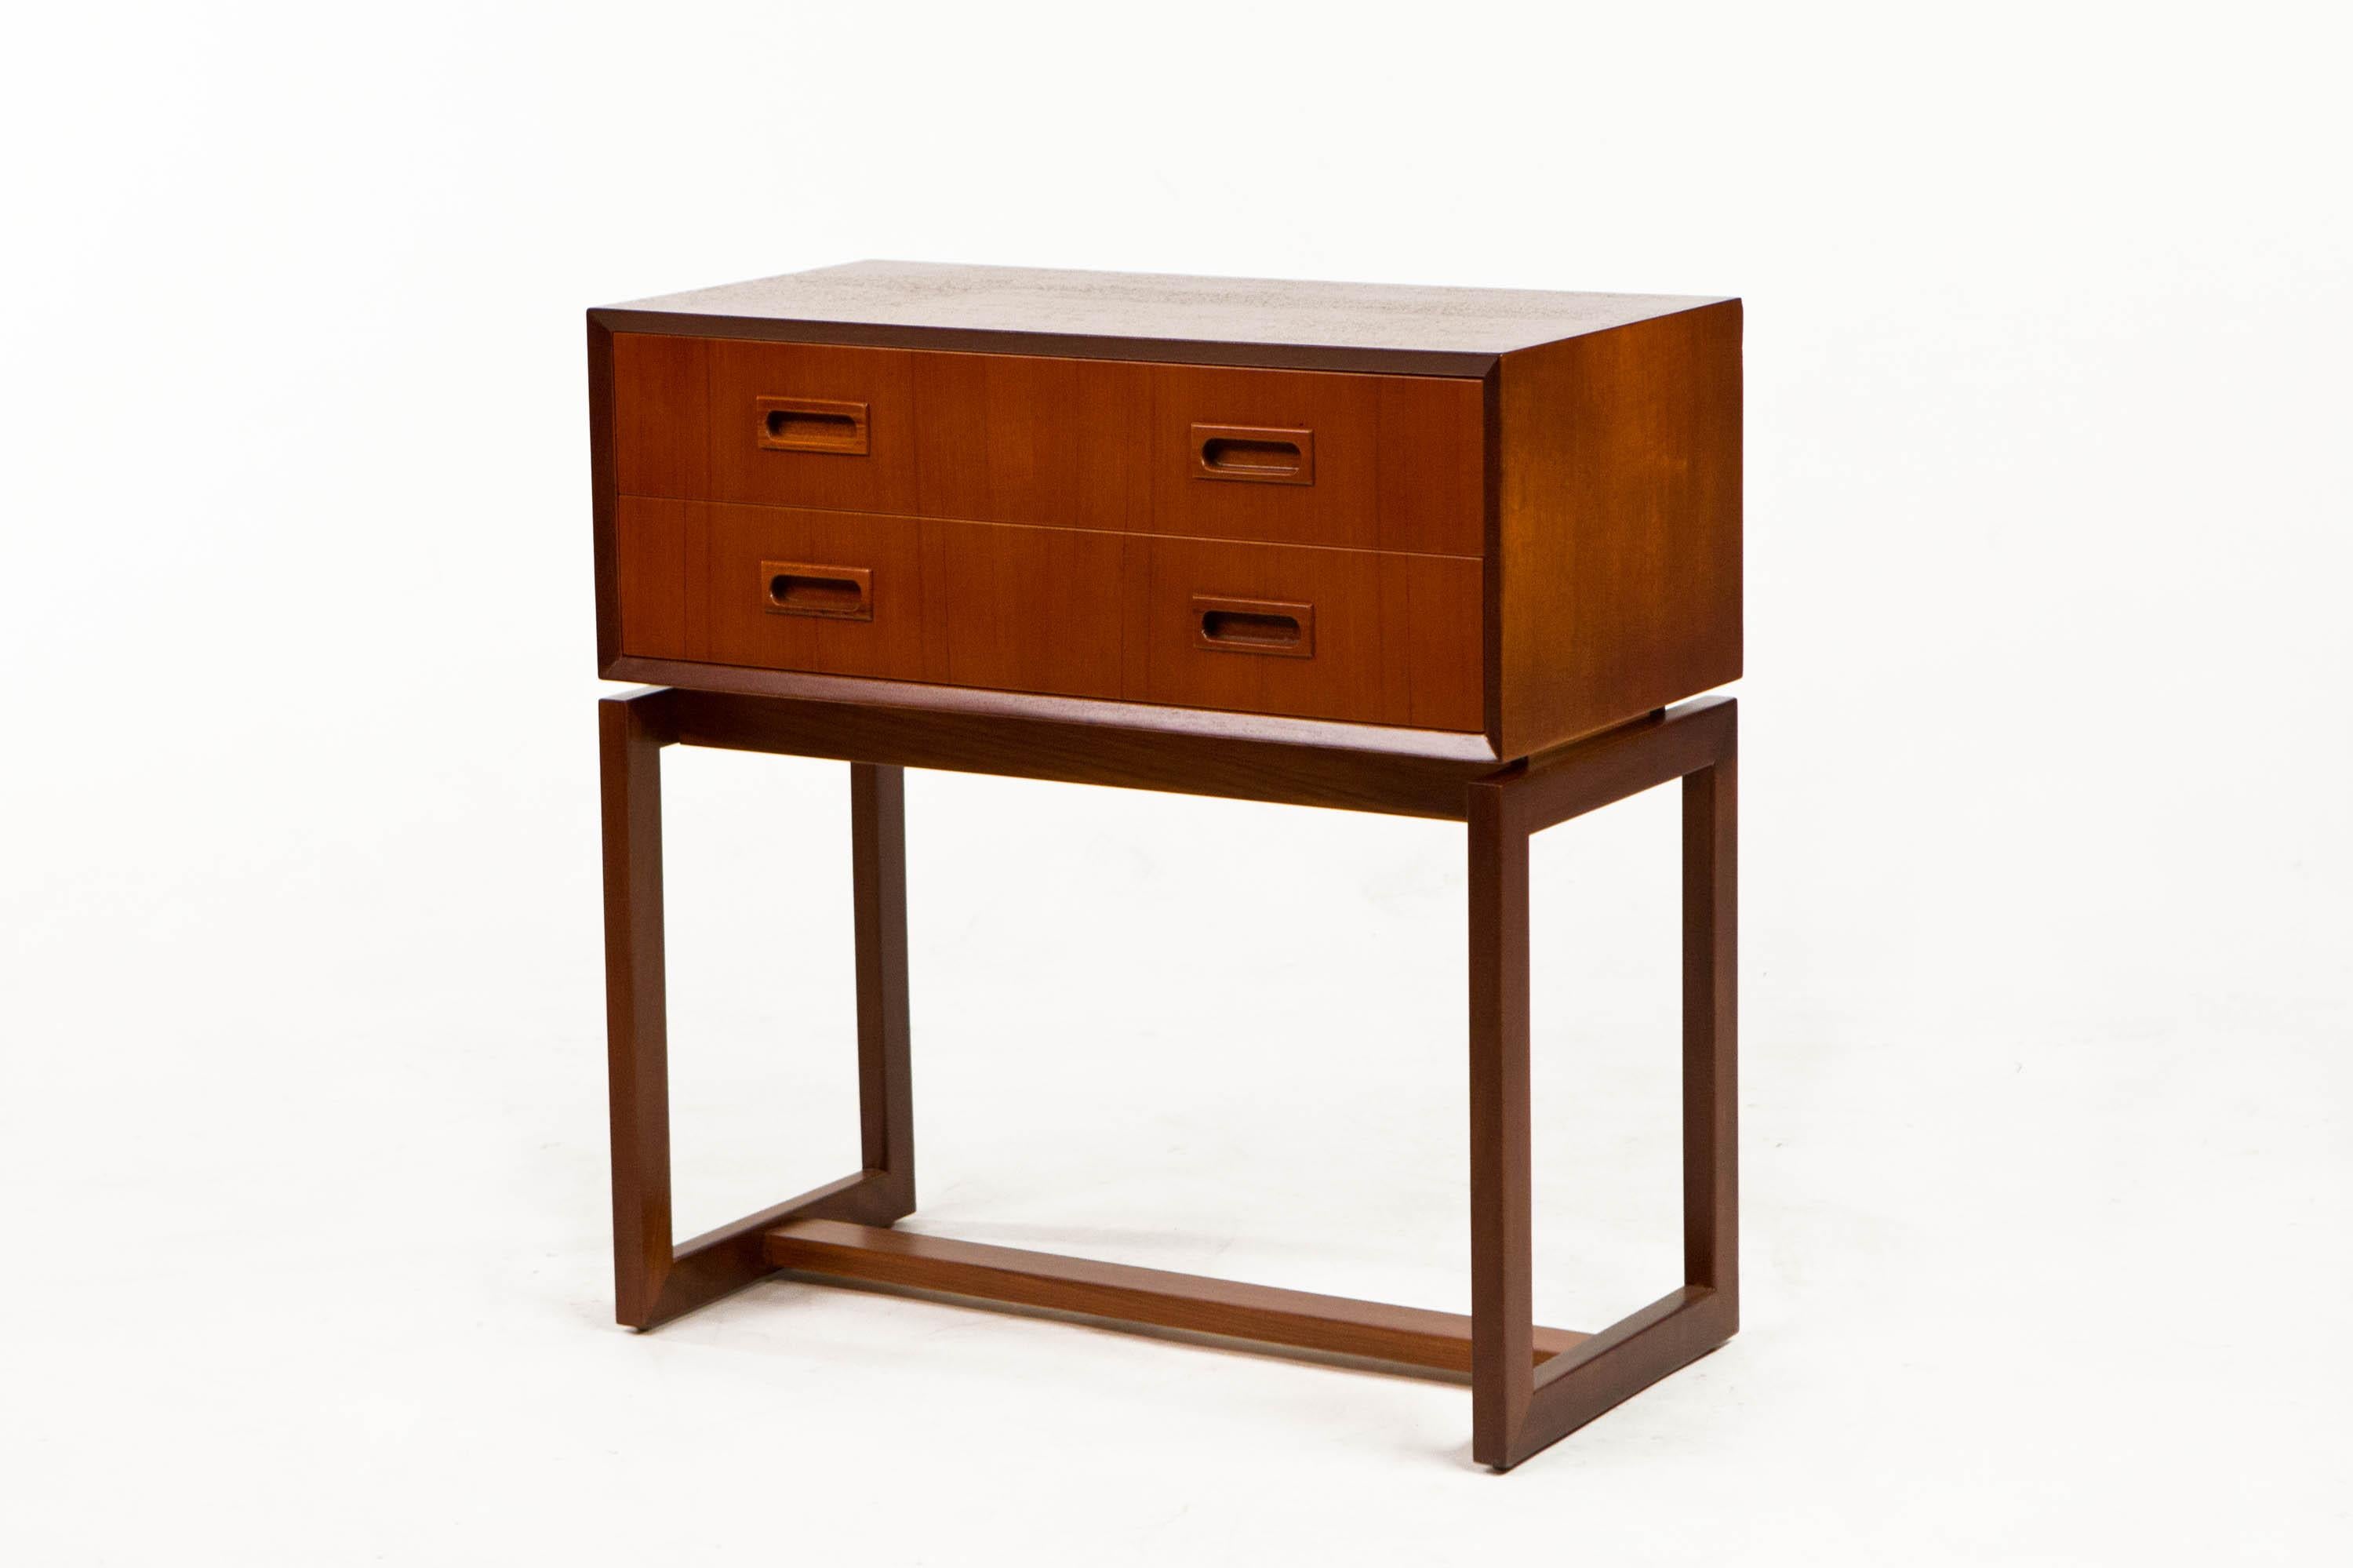 Teak Two Drawer Bureau with Beveled Edge, Danish Design 1950's For Sale 7